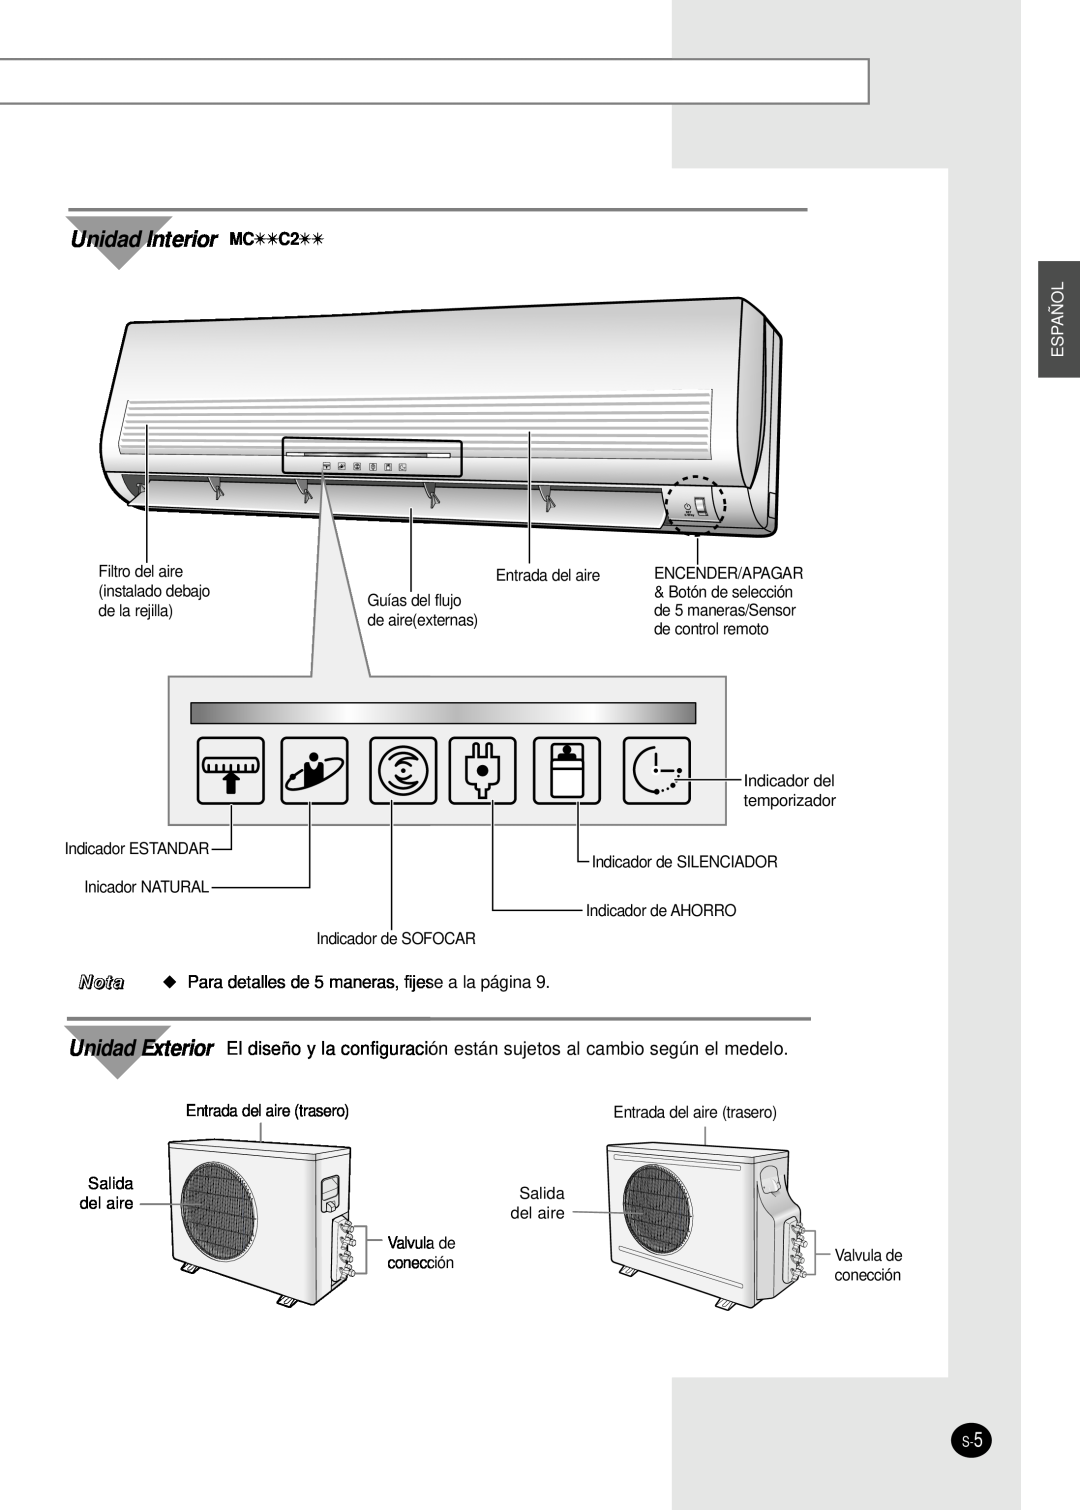 Samsung AM14B1(B2)E07 manuel dutilisation Unidad Interior MCC2, Español 